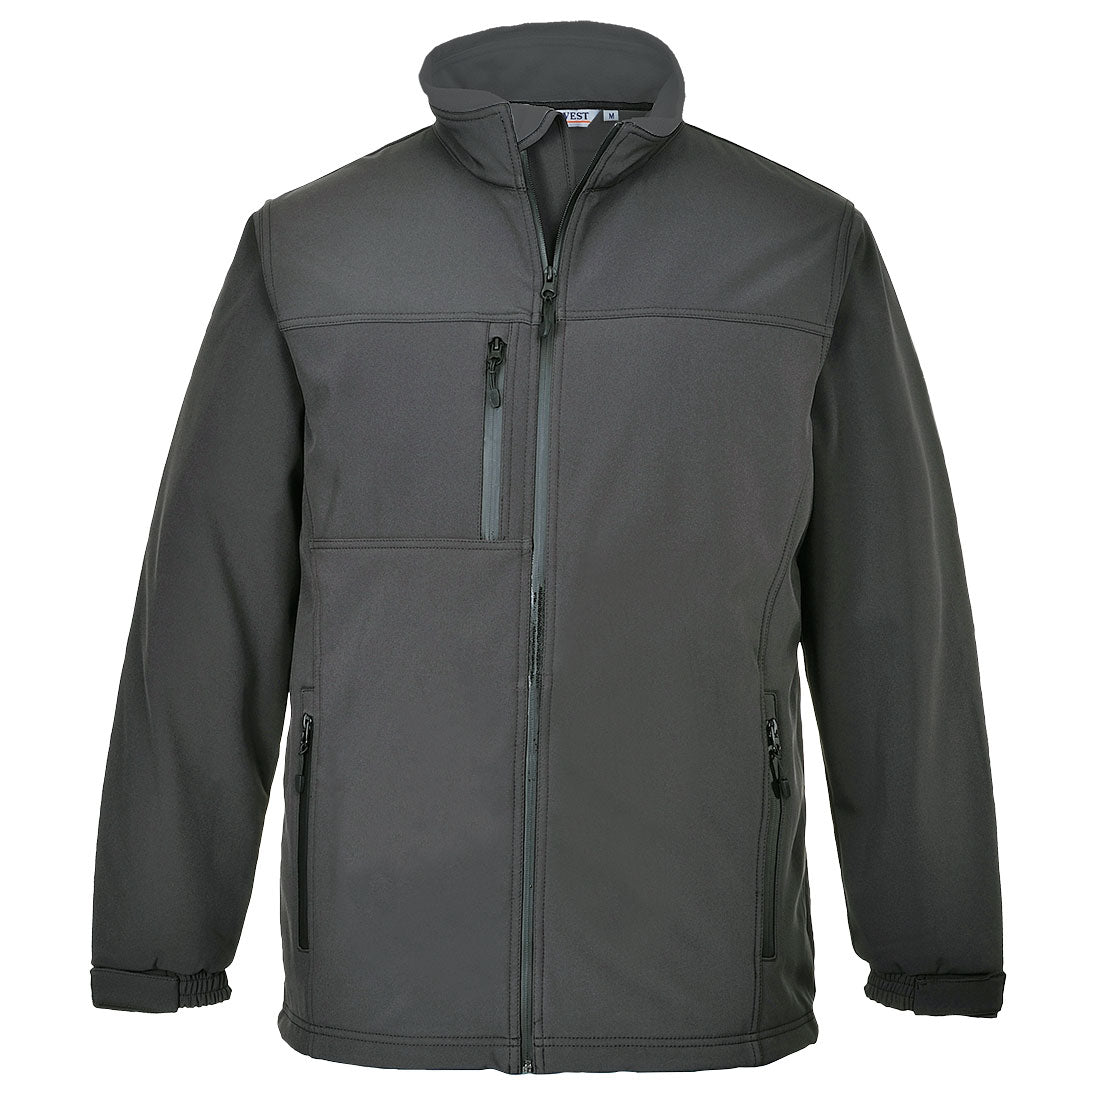 Portwest TK50 Grey Sz S Softshell Jacket Microfleece Coat Waterproof Breathable Work